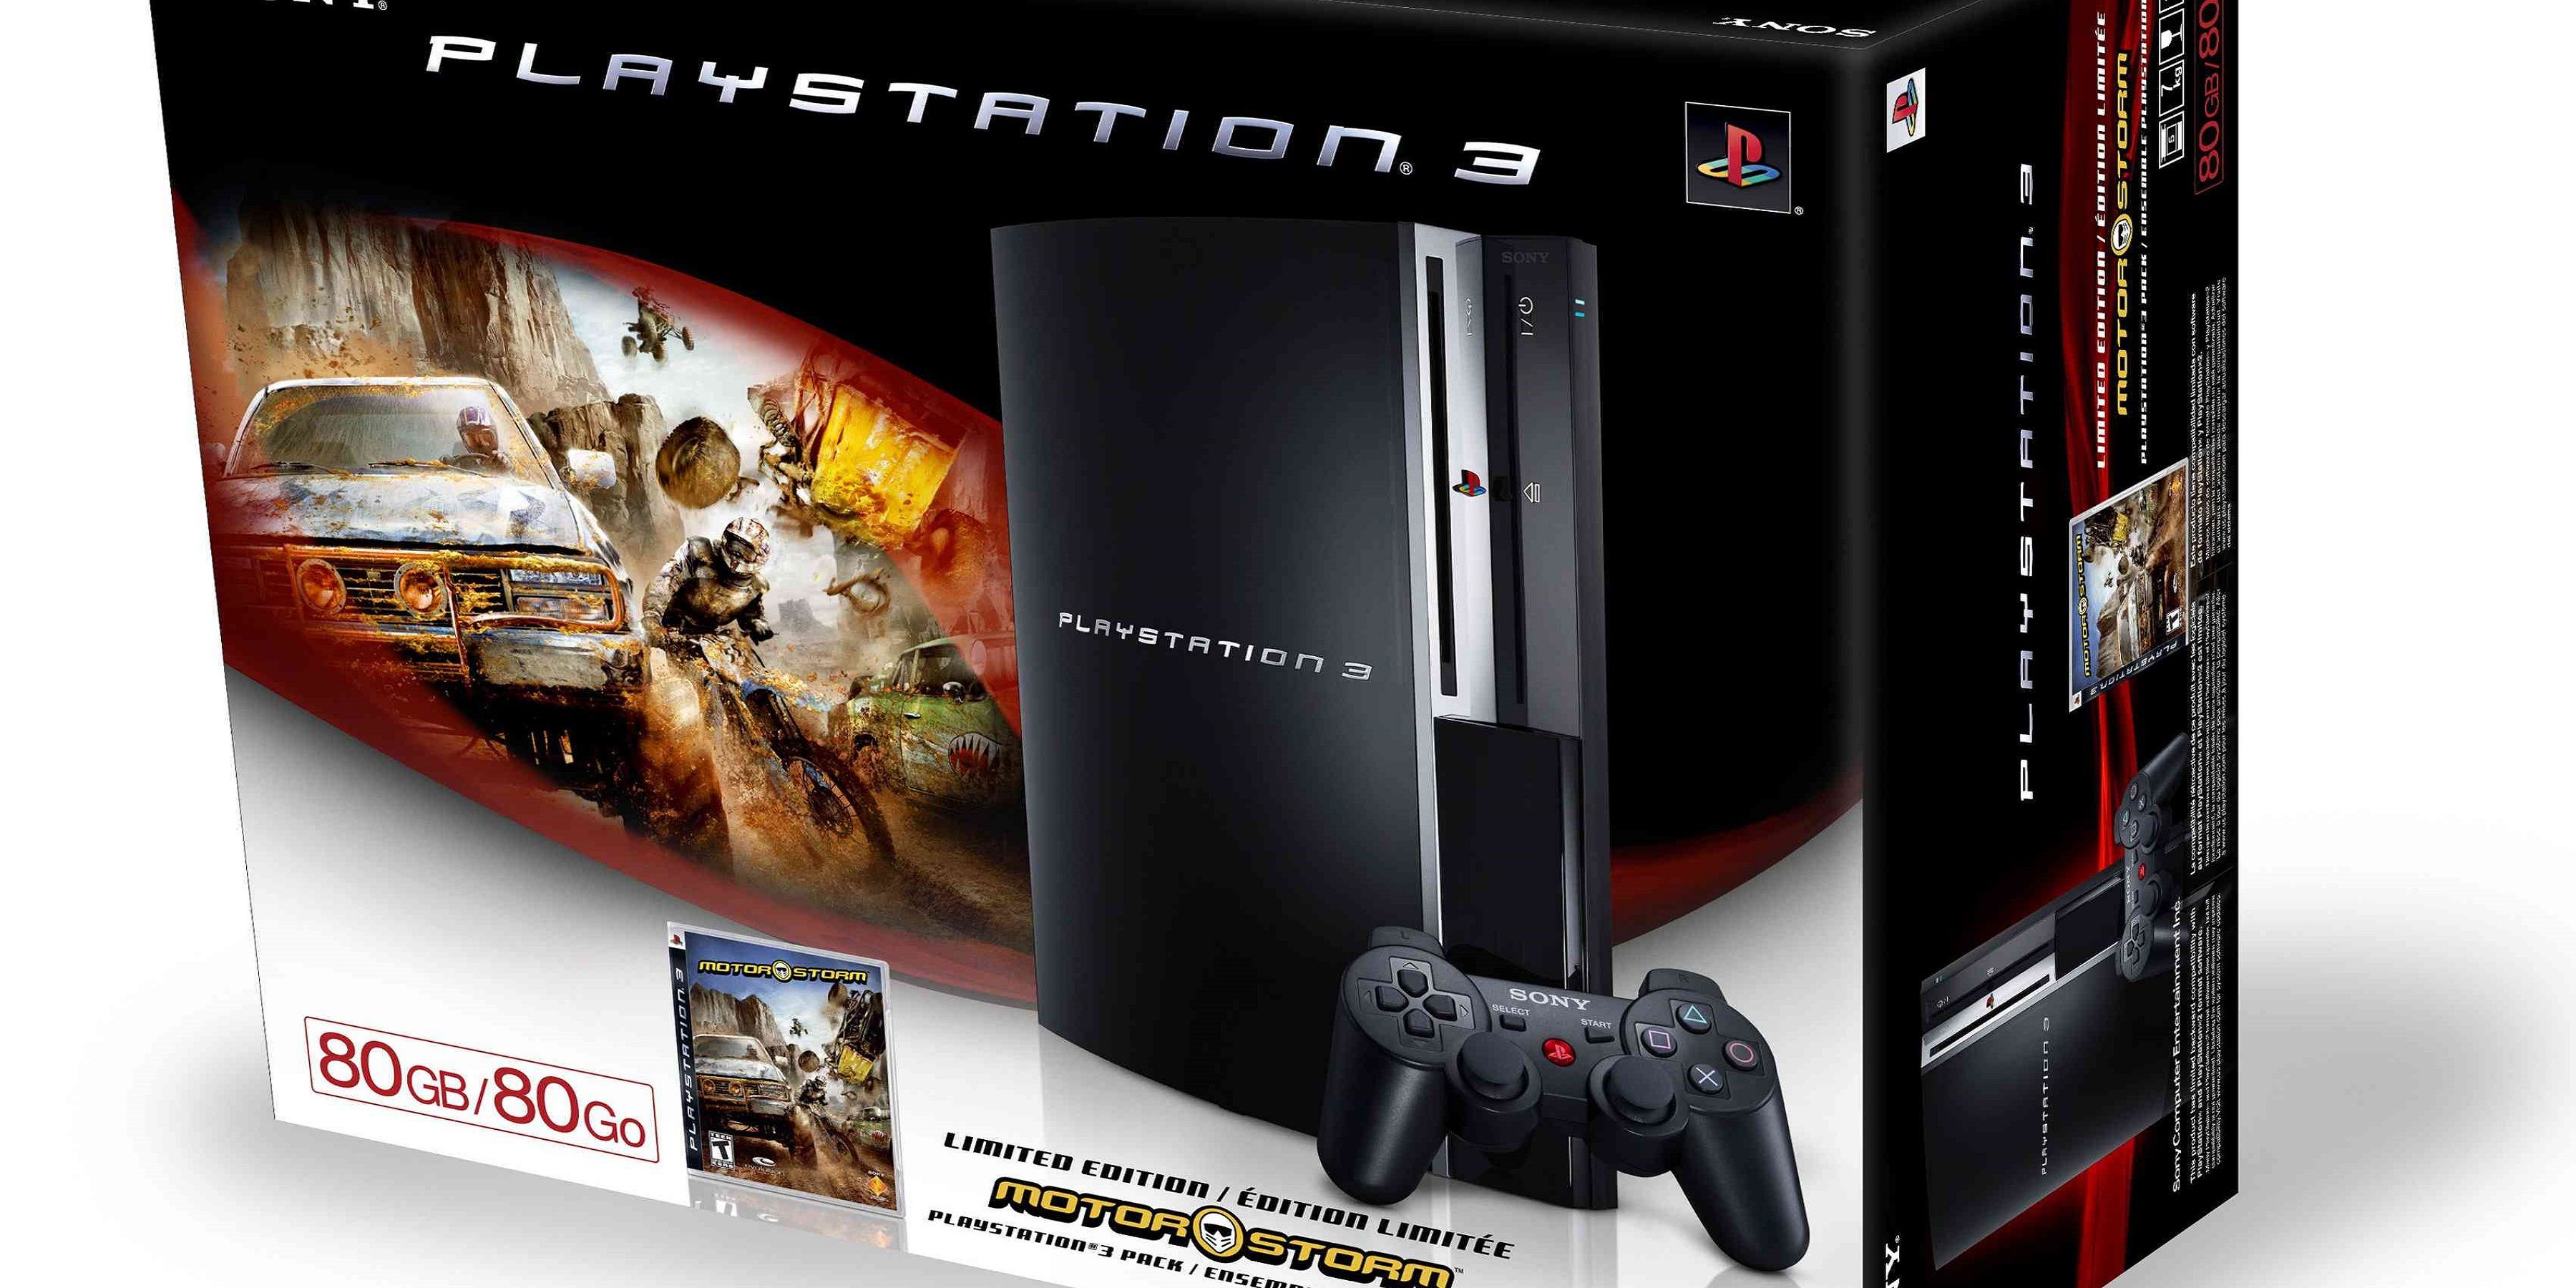 The PlayStation 3 MotorStorm Edition